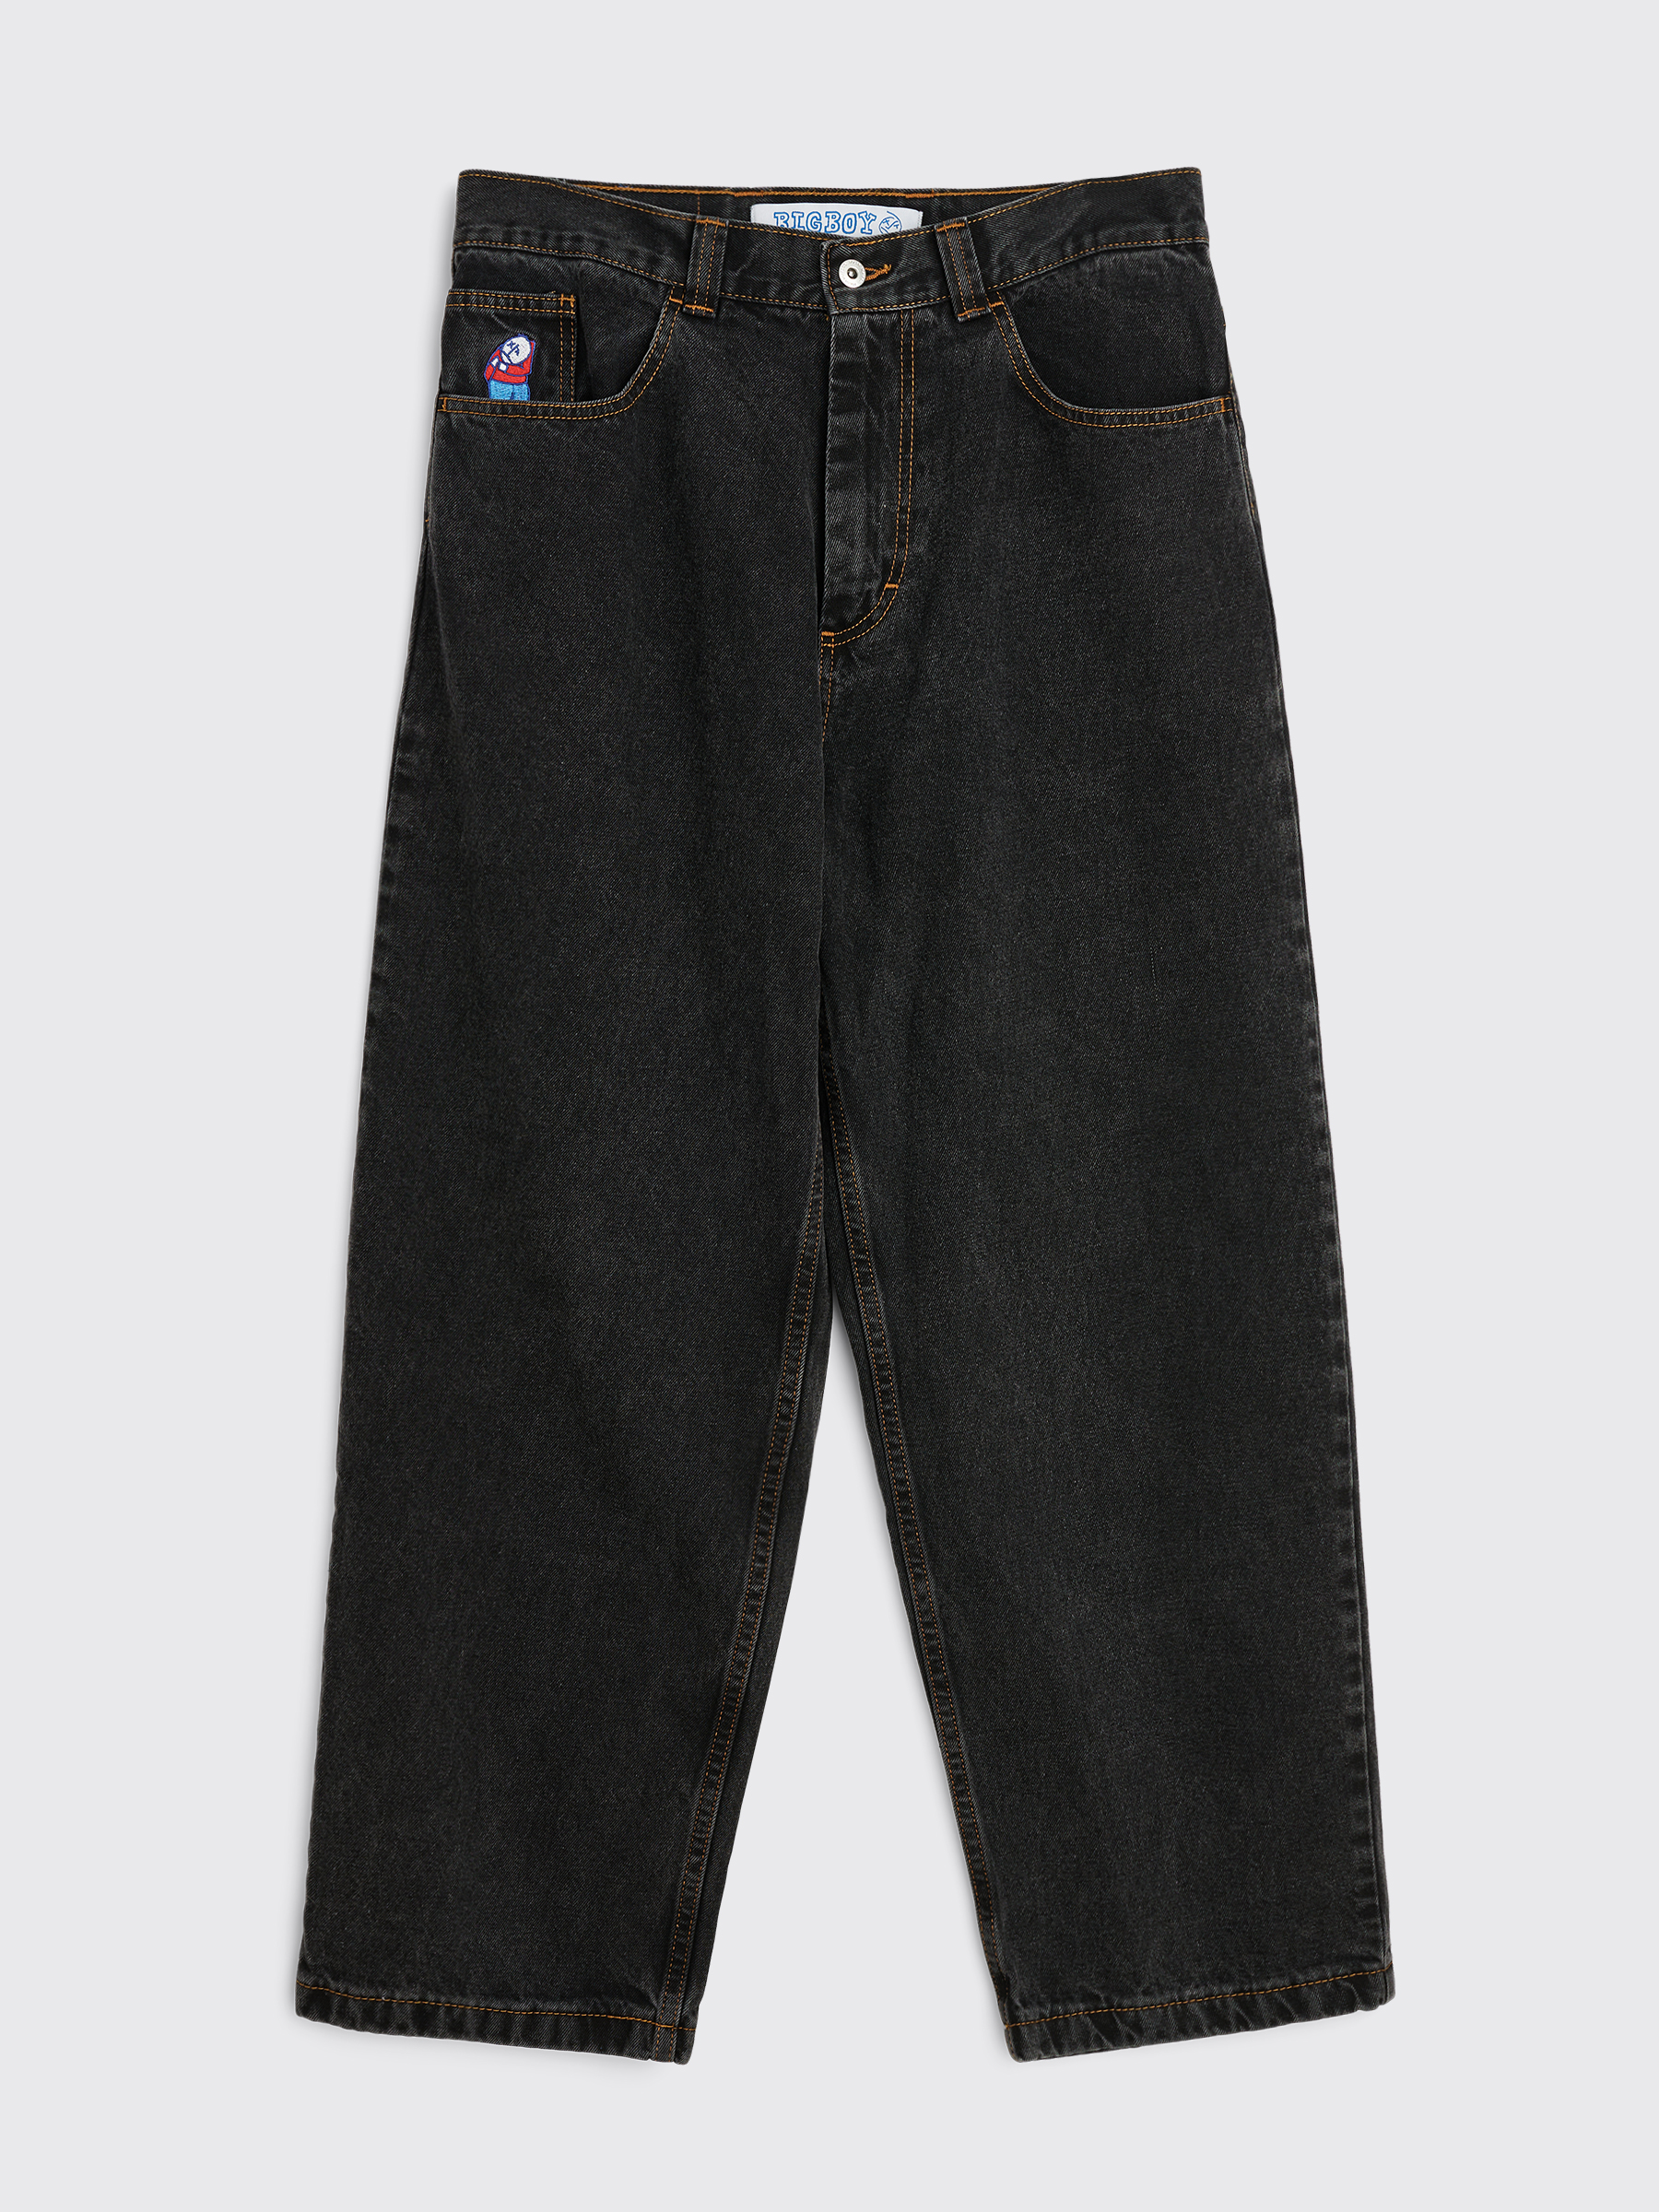 Très Bien - Polar Skate Co. Big Boy Jeans Washed Black